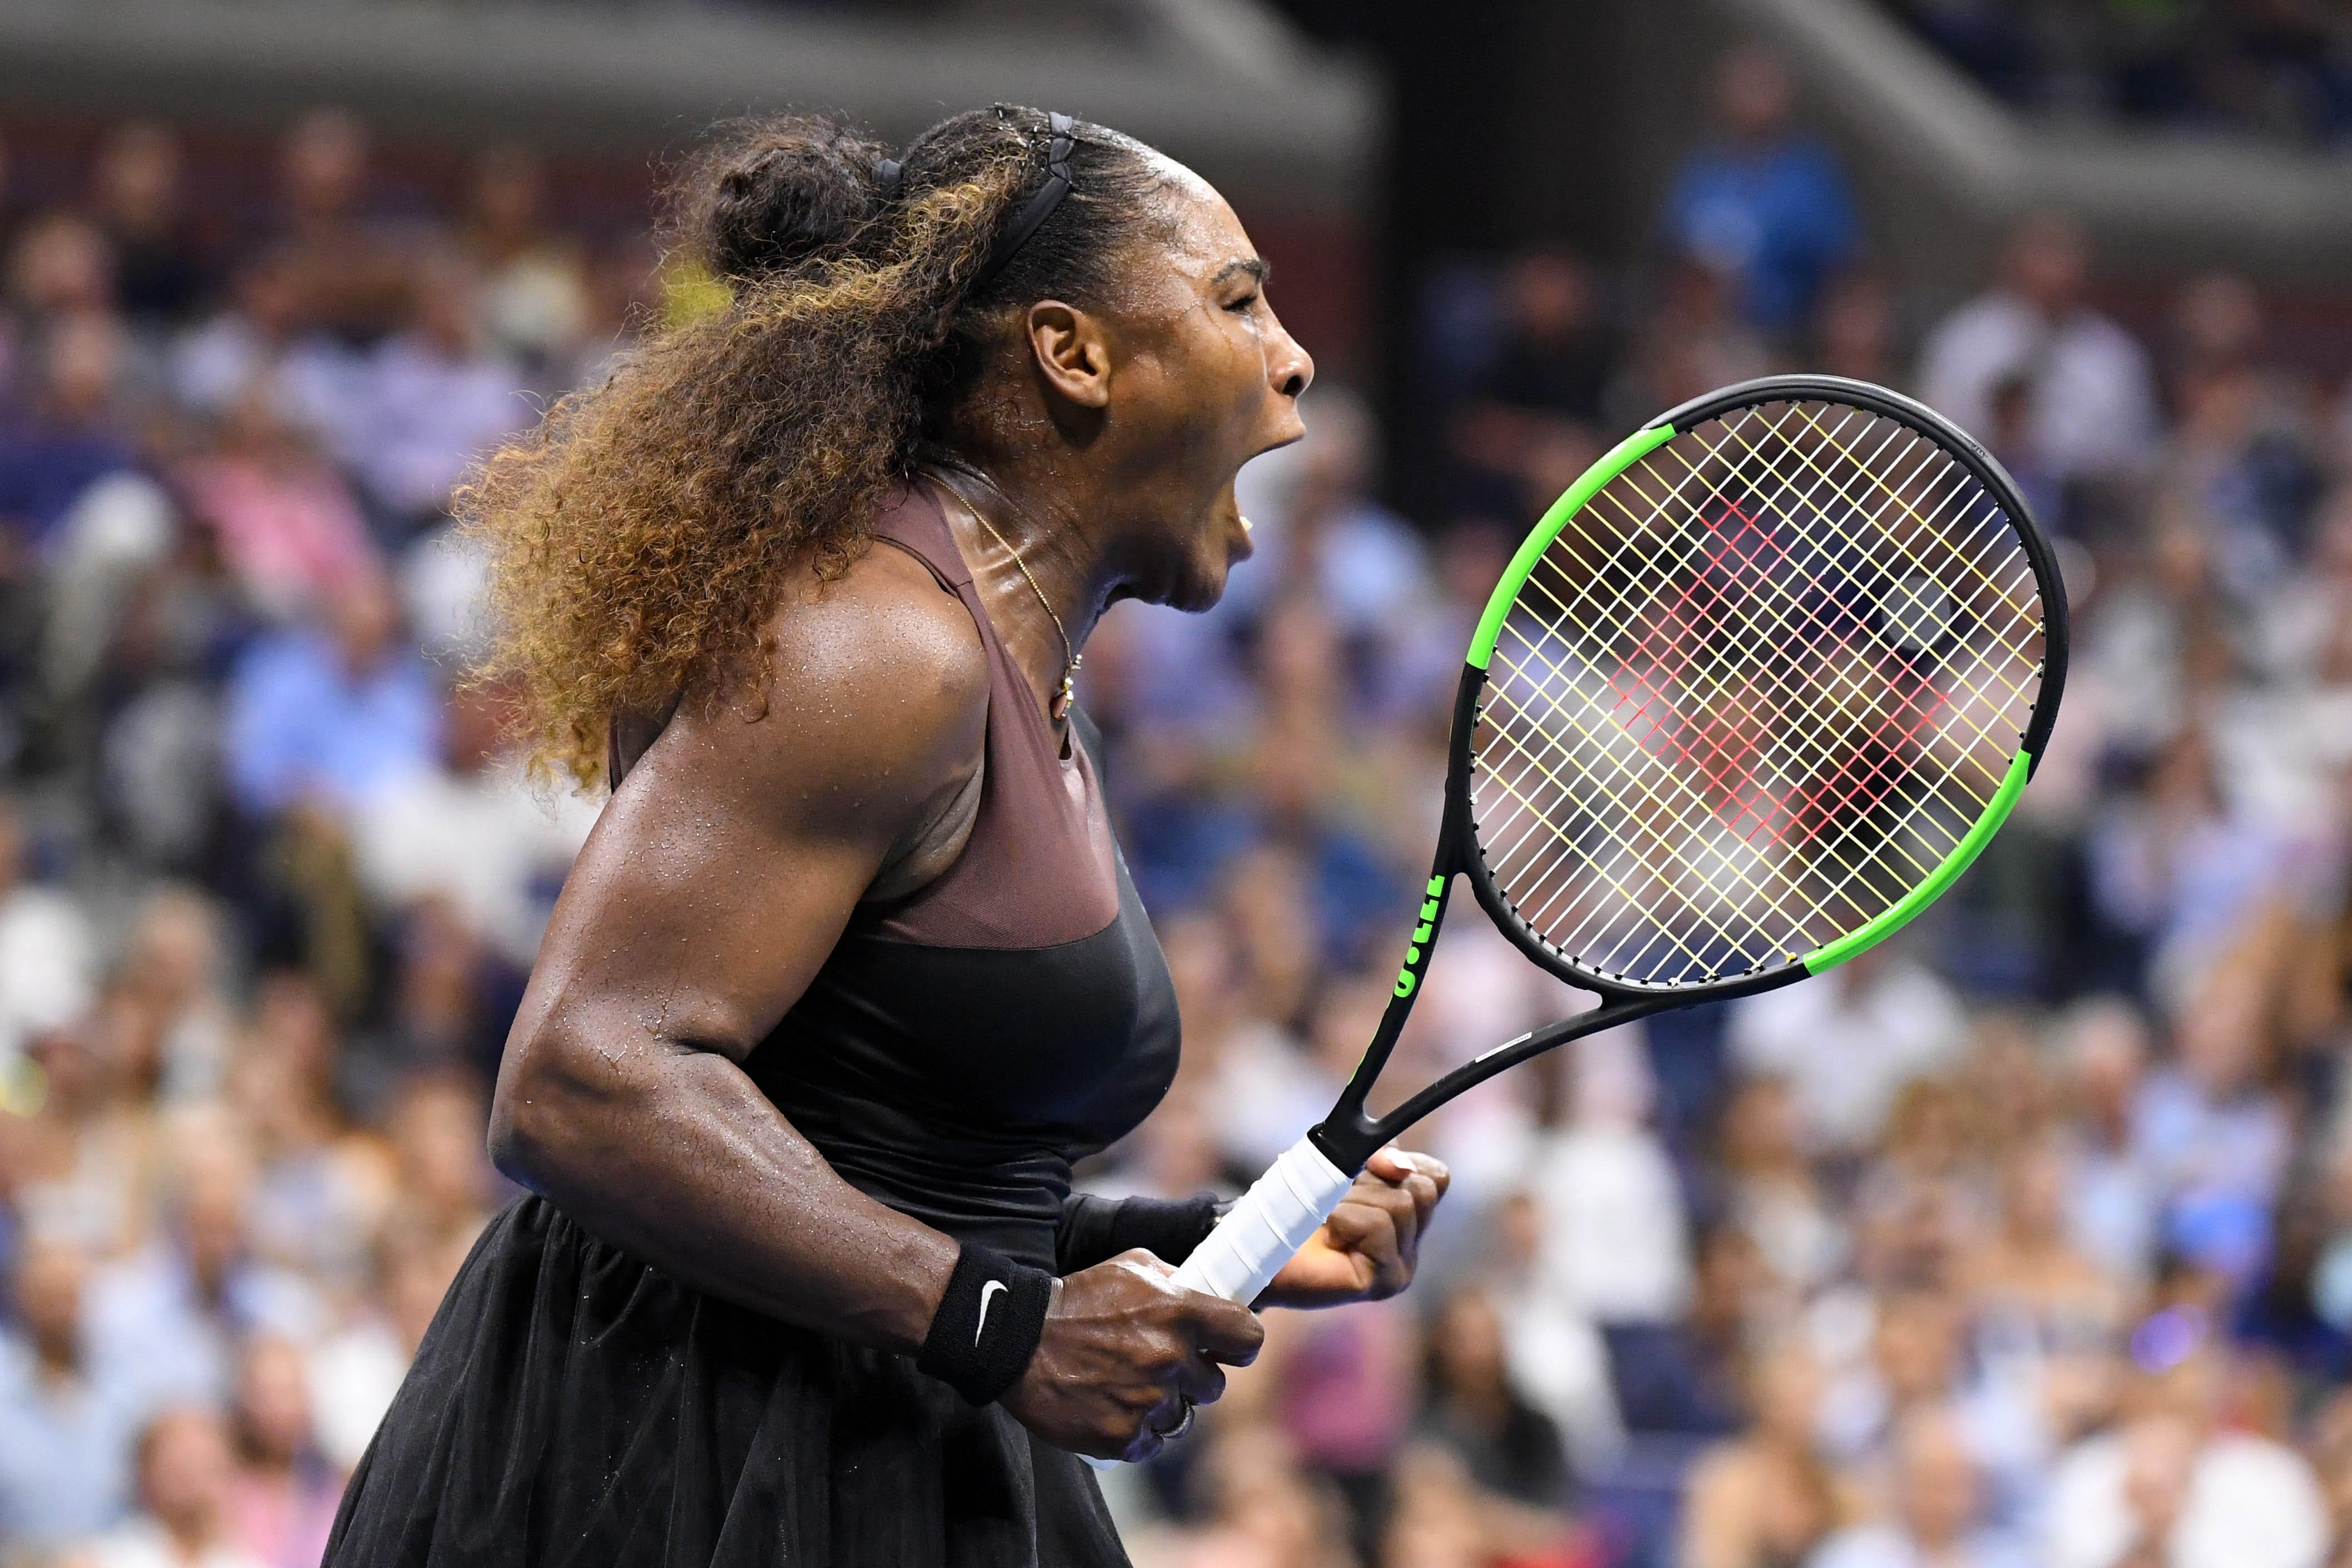 Serena Williams screams during a quarter-final match against Karolina Pliskova of Czech Republic on day nine of the 2018 U.S. Open tennis tournament at USTA Billie Jean King National Tennis Center in New York.